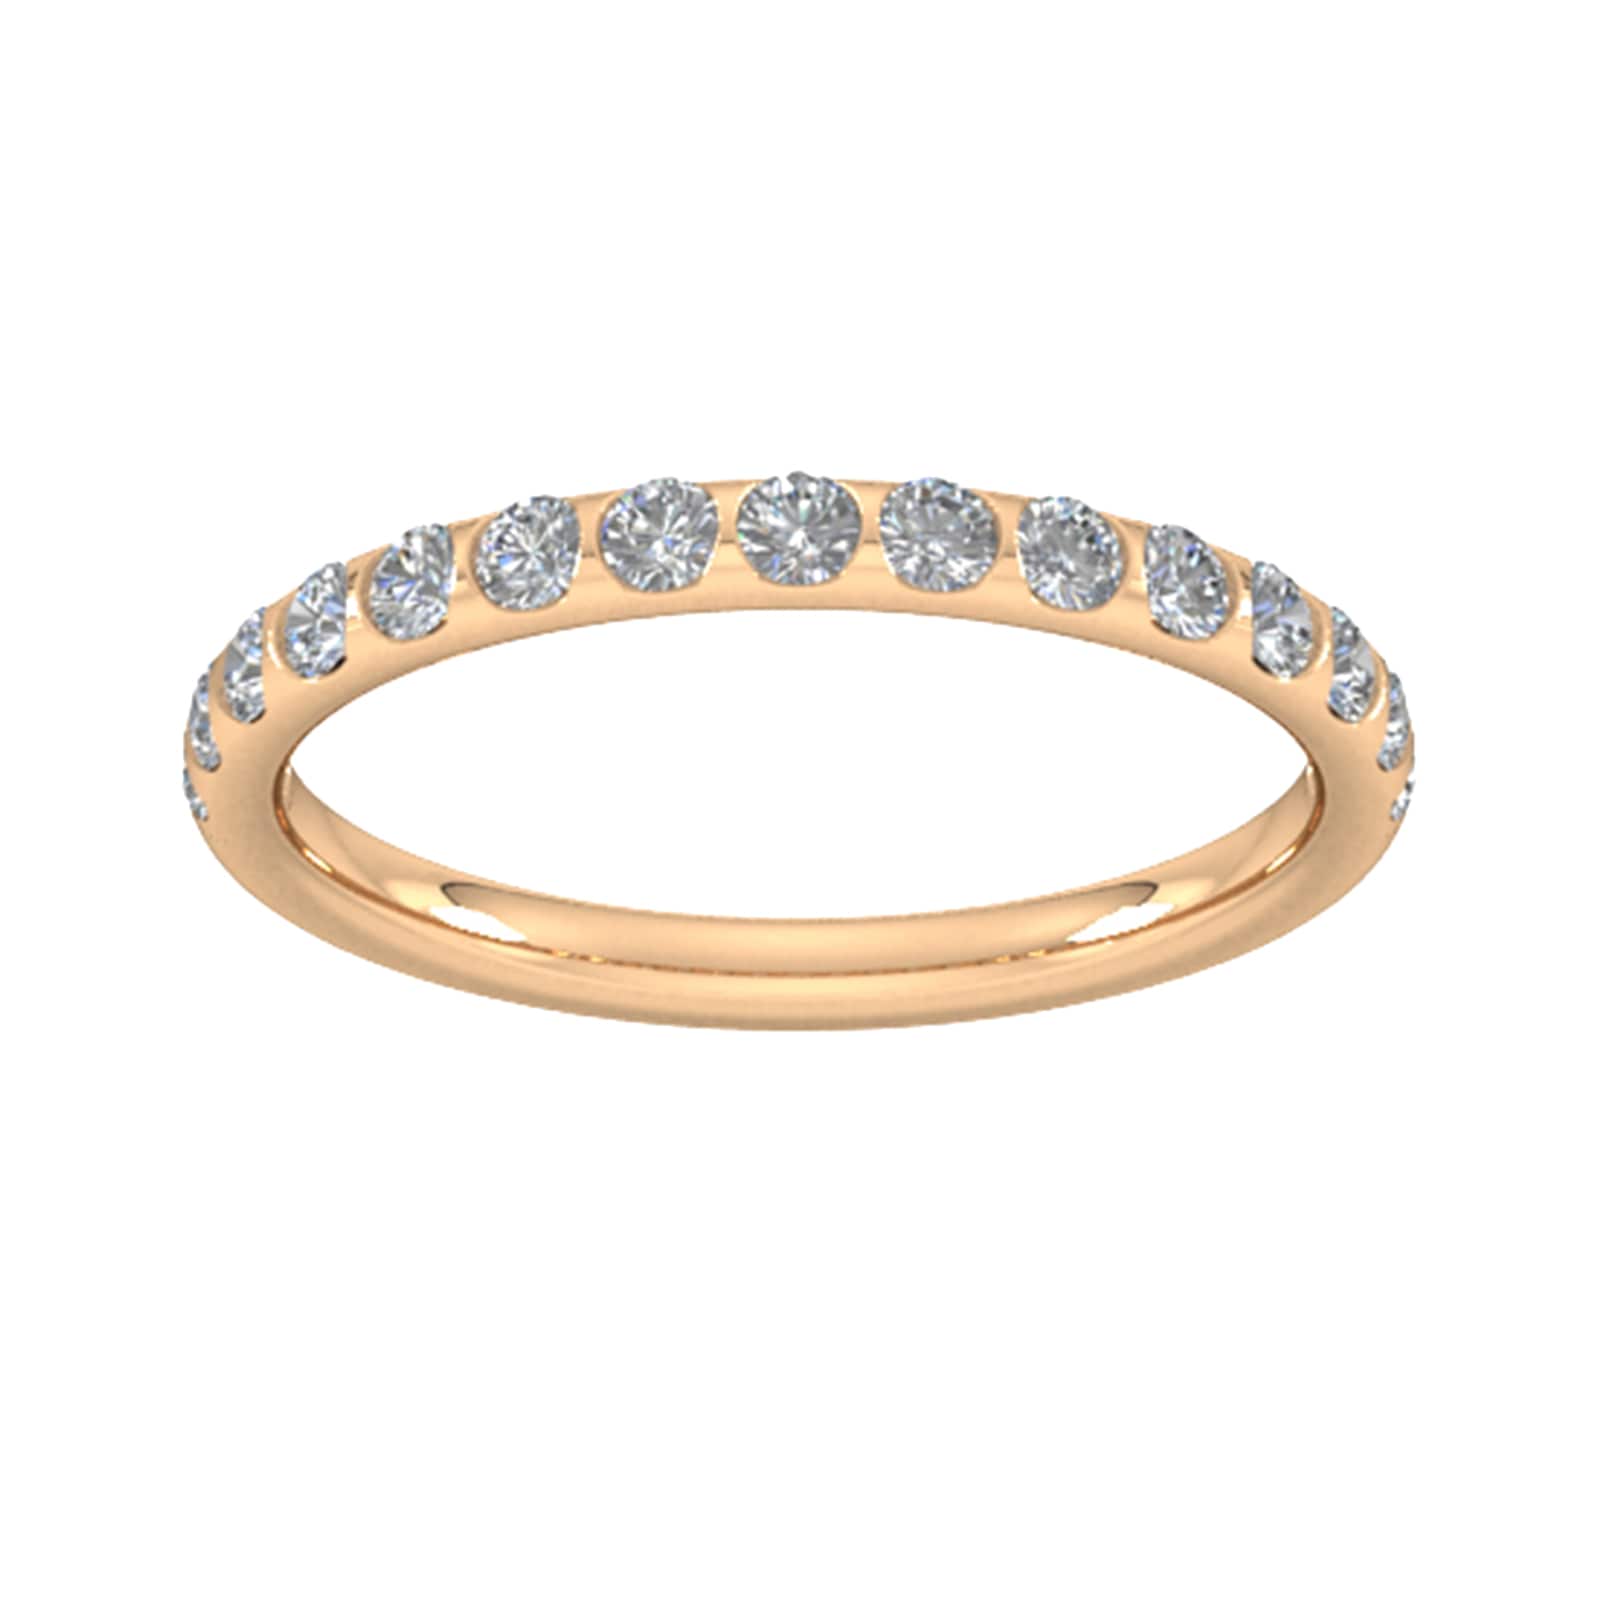 0.53 Carat Total Weight Curved Bar Brilliant Cut Diamond Set Wedding Ring In 18 Carat Rose Gold - Ring Size K